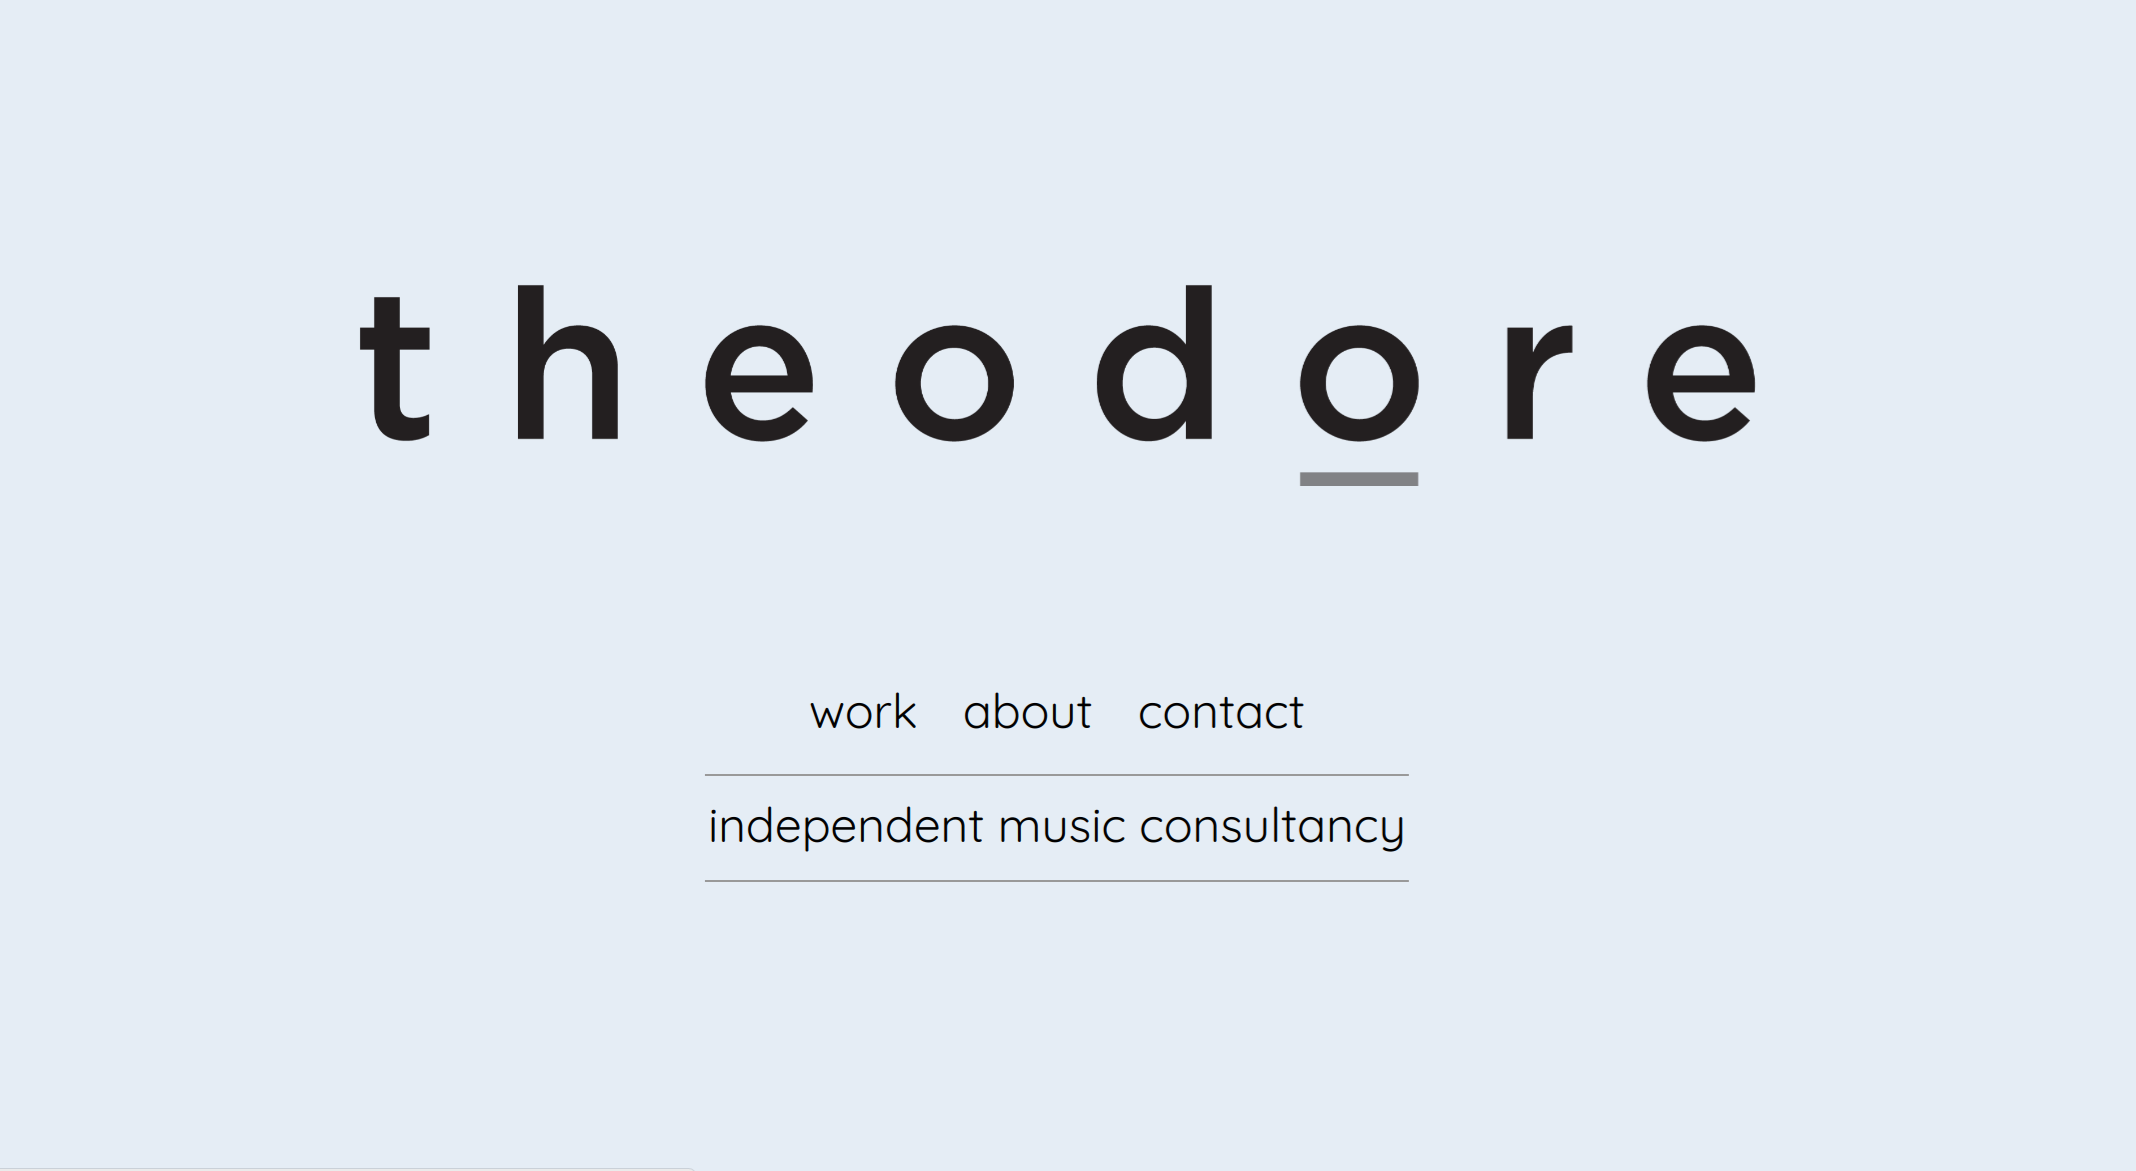 Homepage screen of Theodore music consultancy